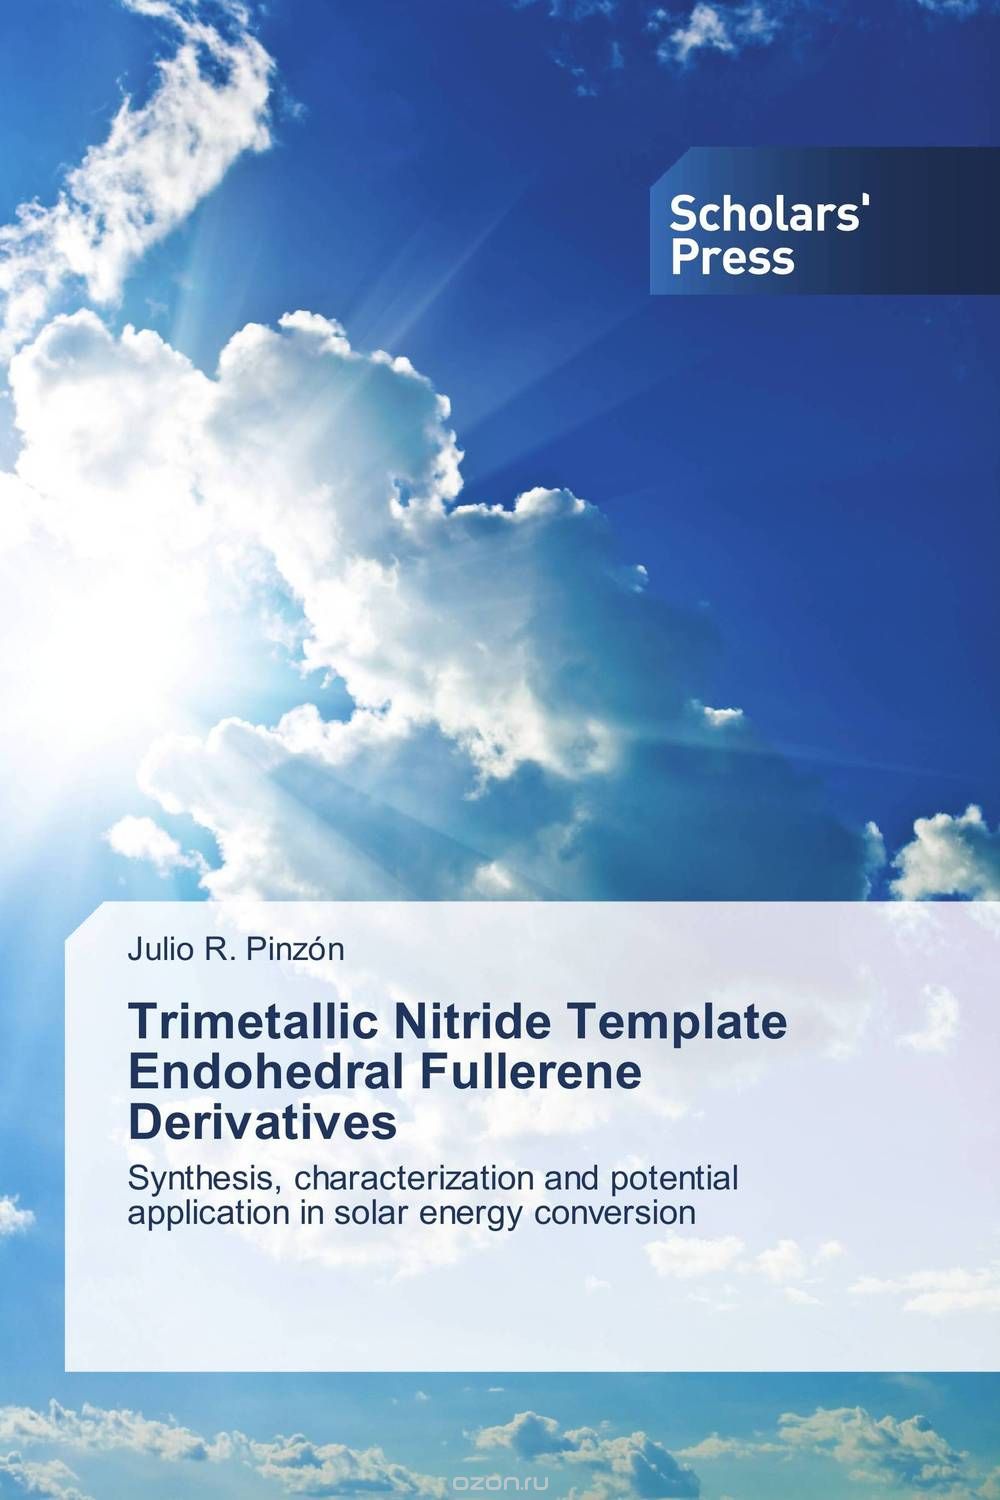 Trimetallic Nitride Template Endohedral Fullerene Derivatives